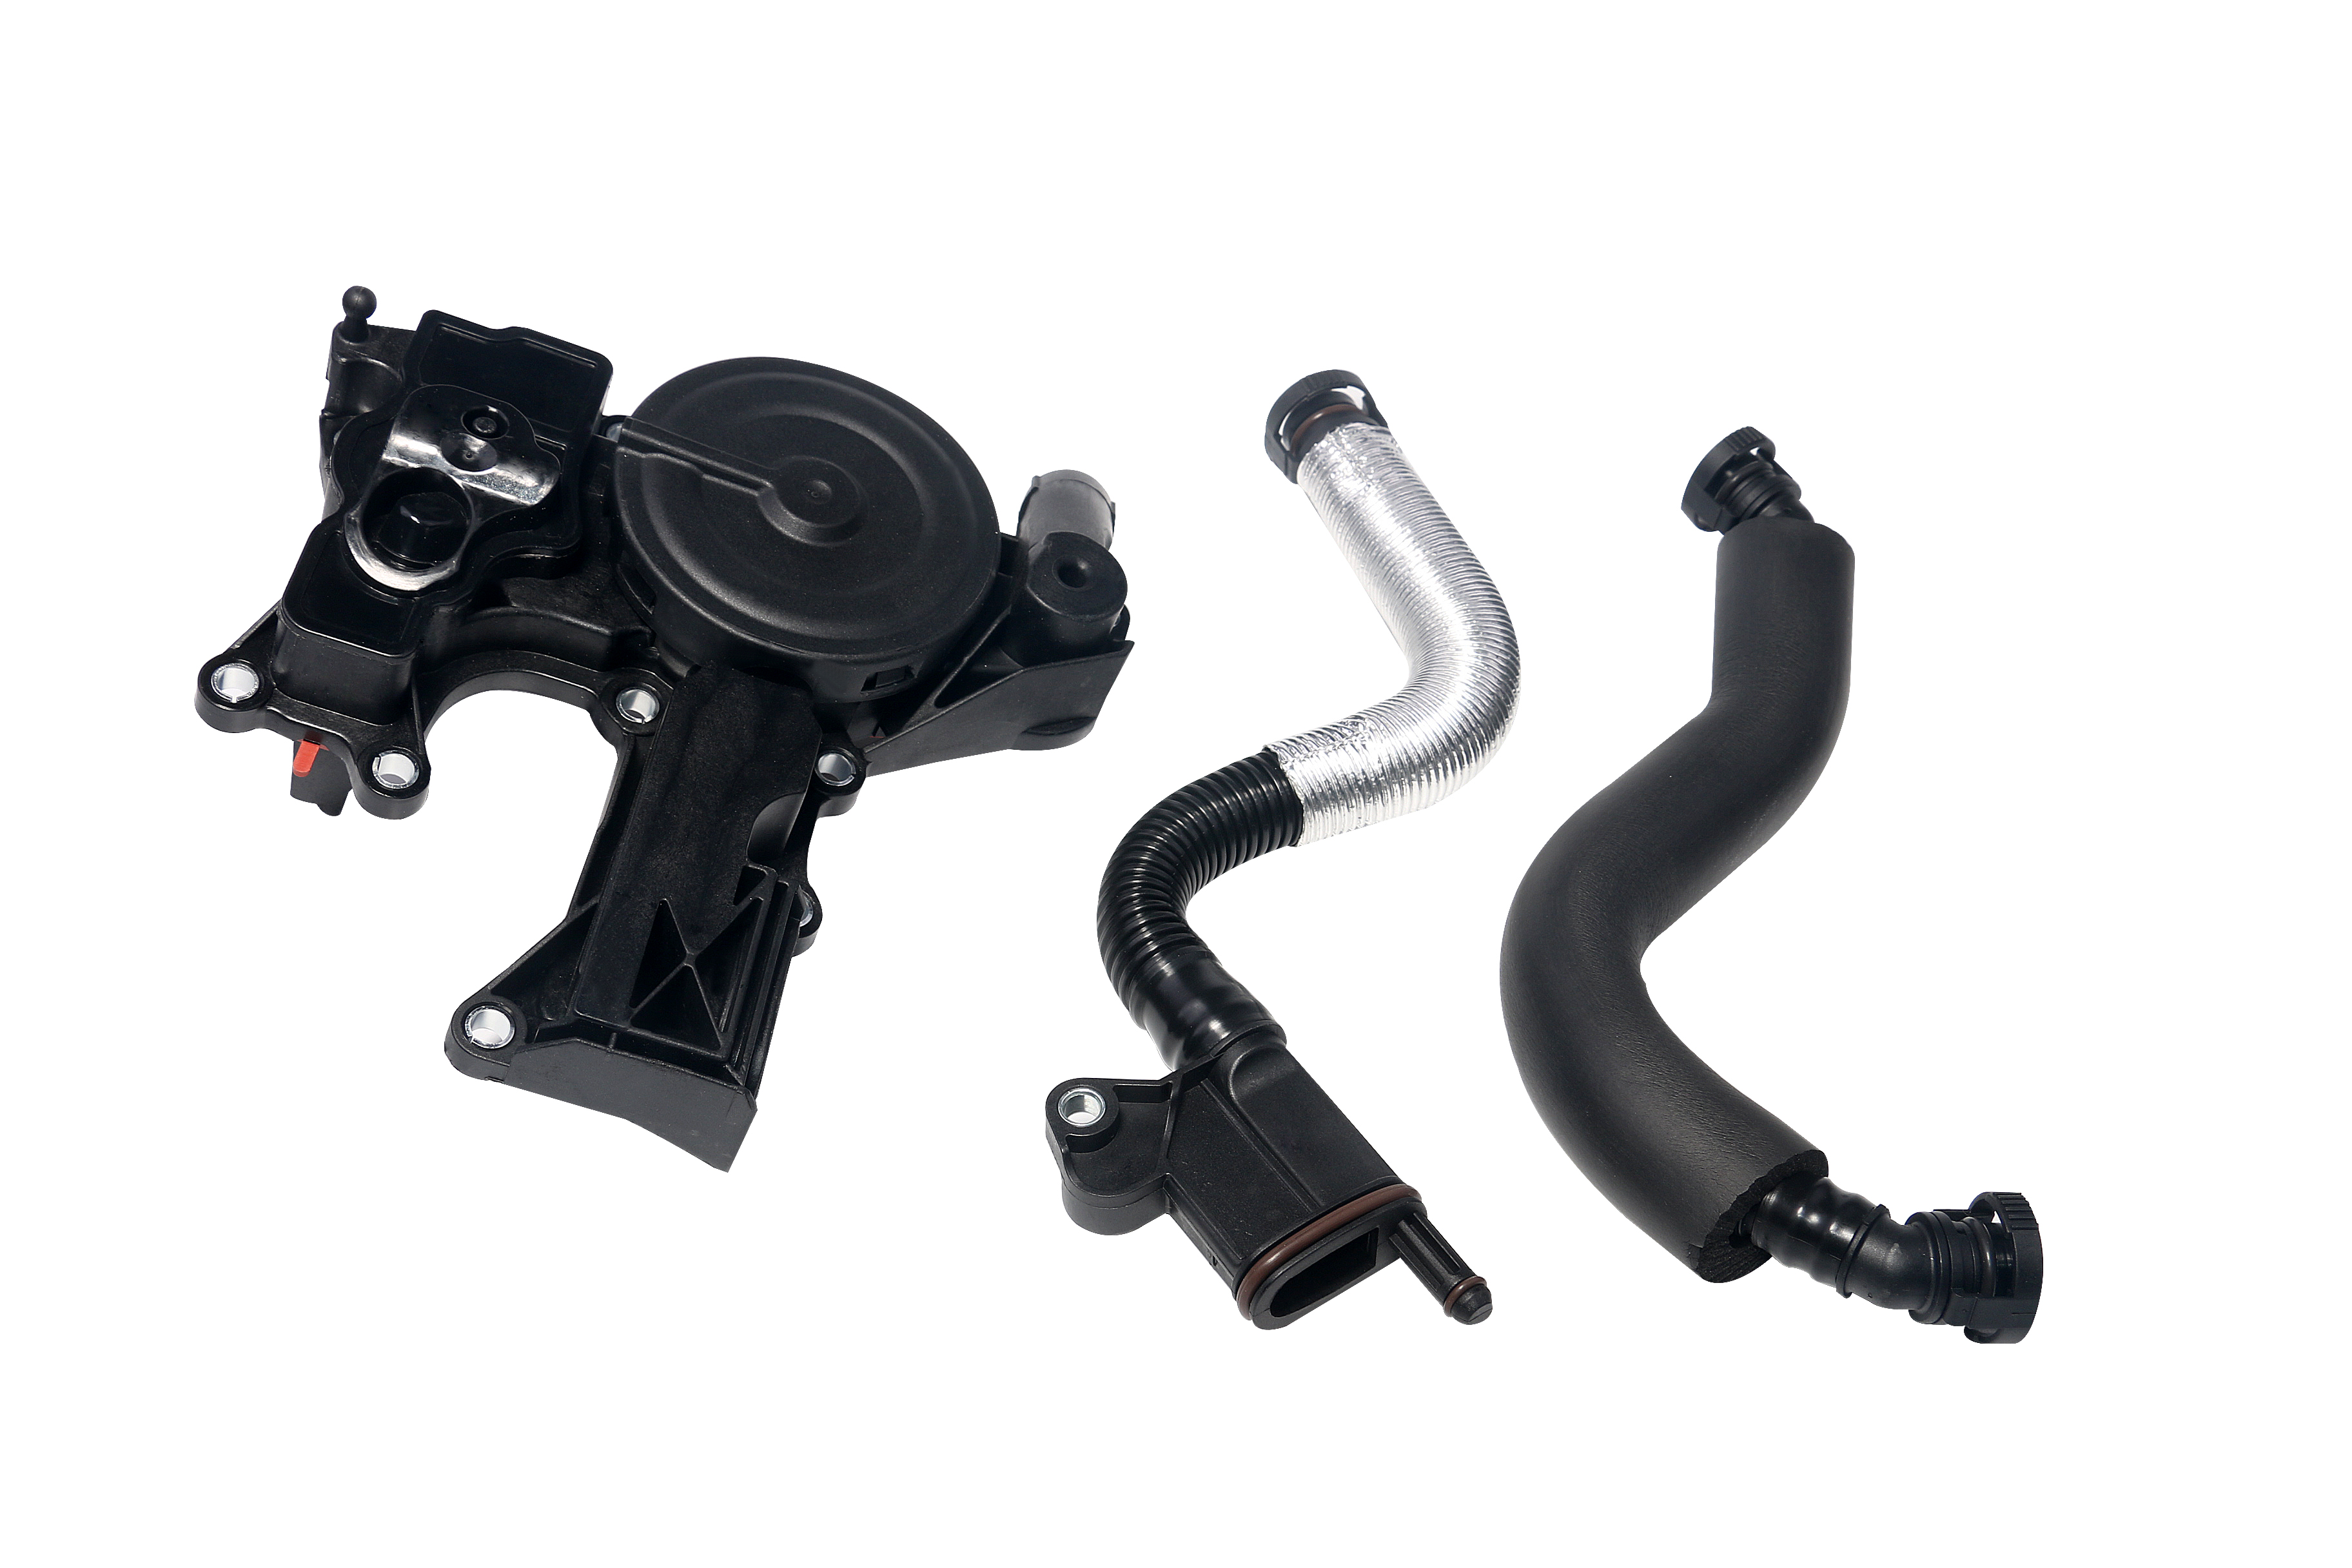 PCV Crankcase Vent Valve Breather Hose Kit - Fits 2.0L Turbo Volkswagen & Audi TSI & FSI Engines Image